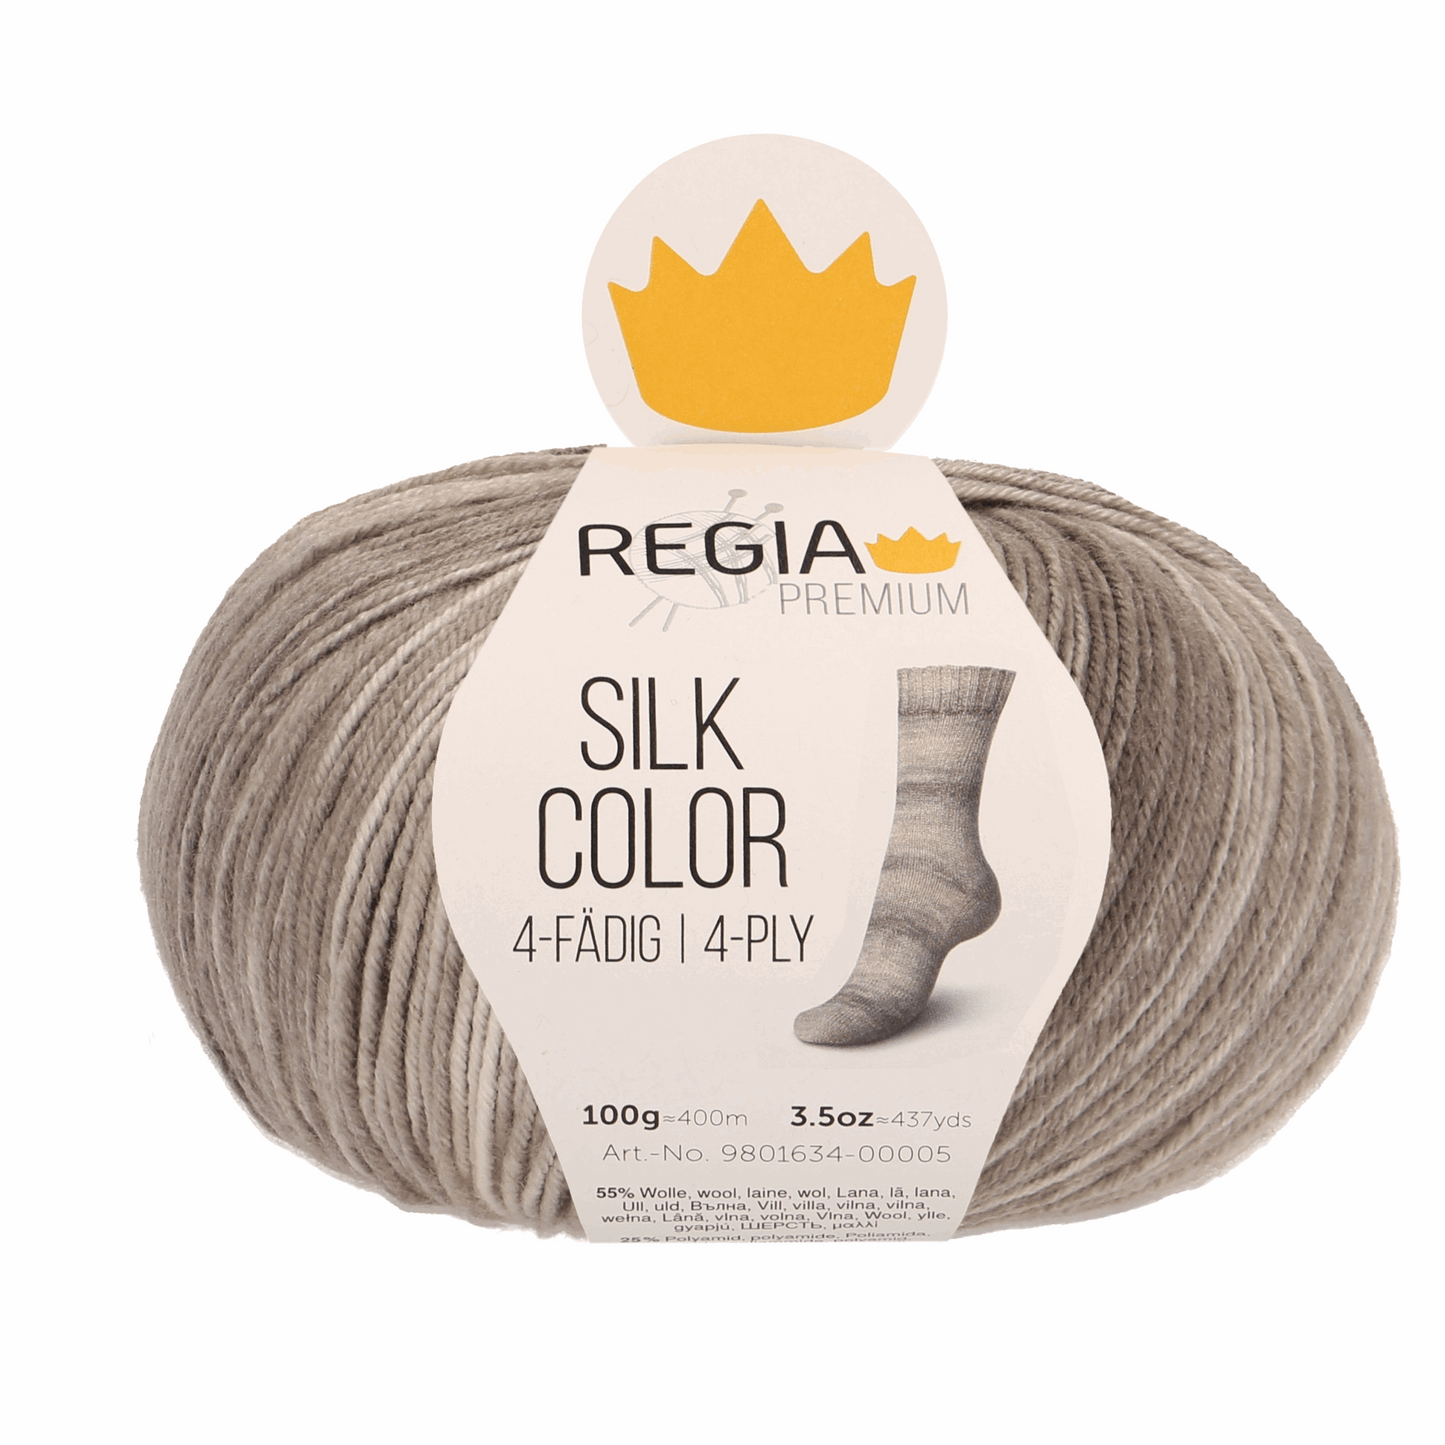 Regia Silk Premium Color 100g, 90634, Farbe taupe color 21